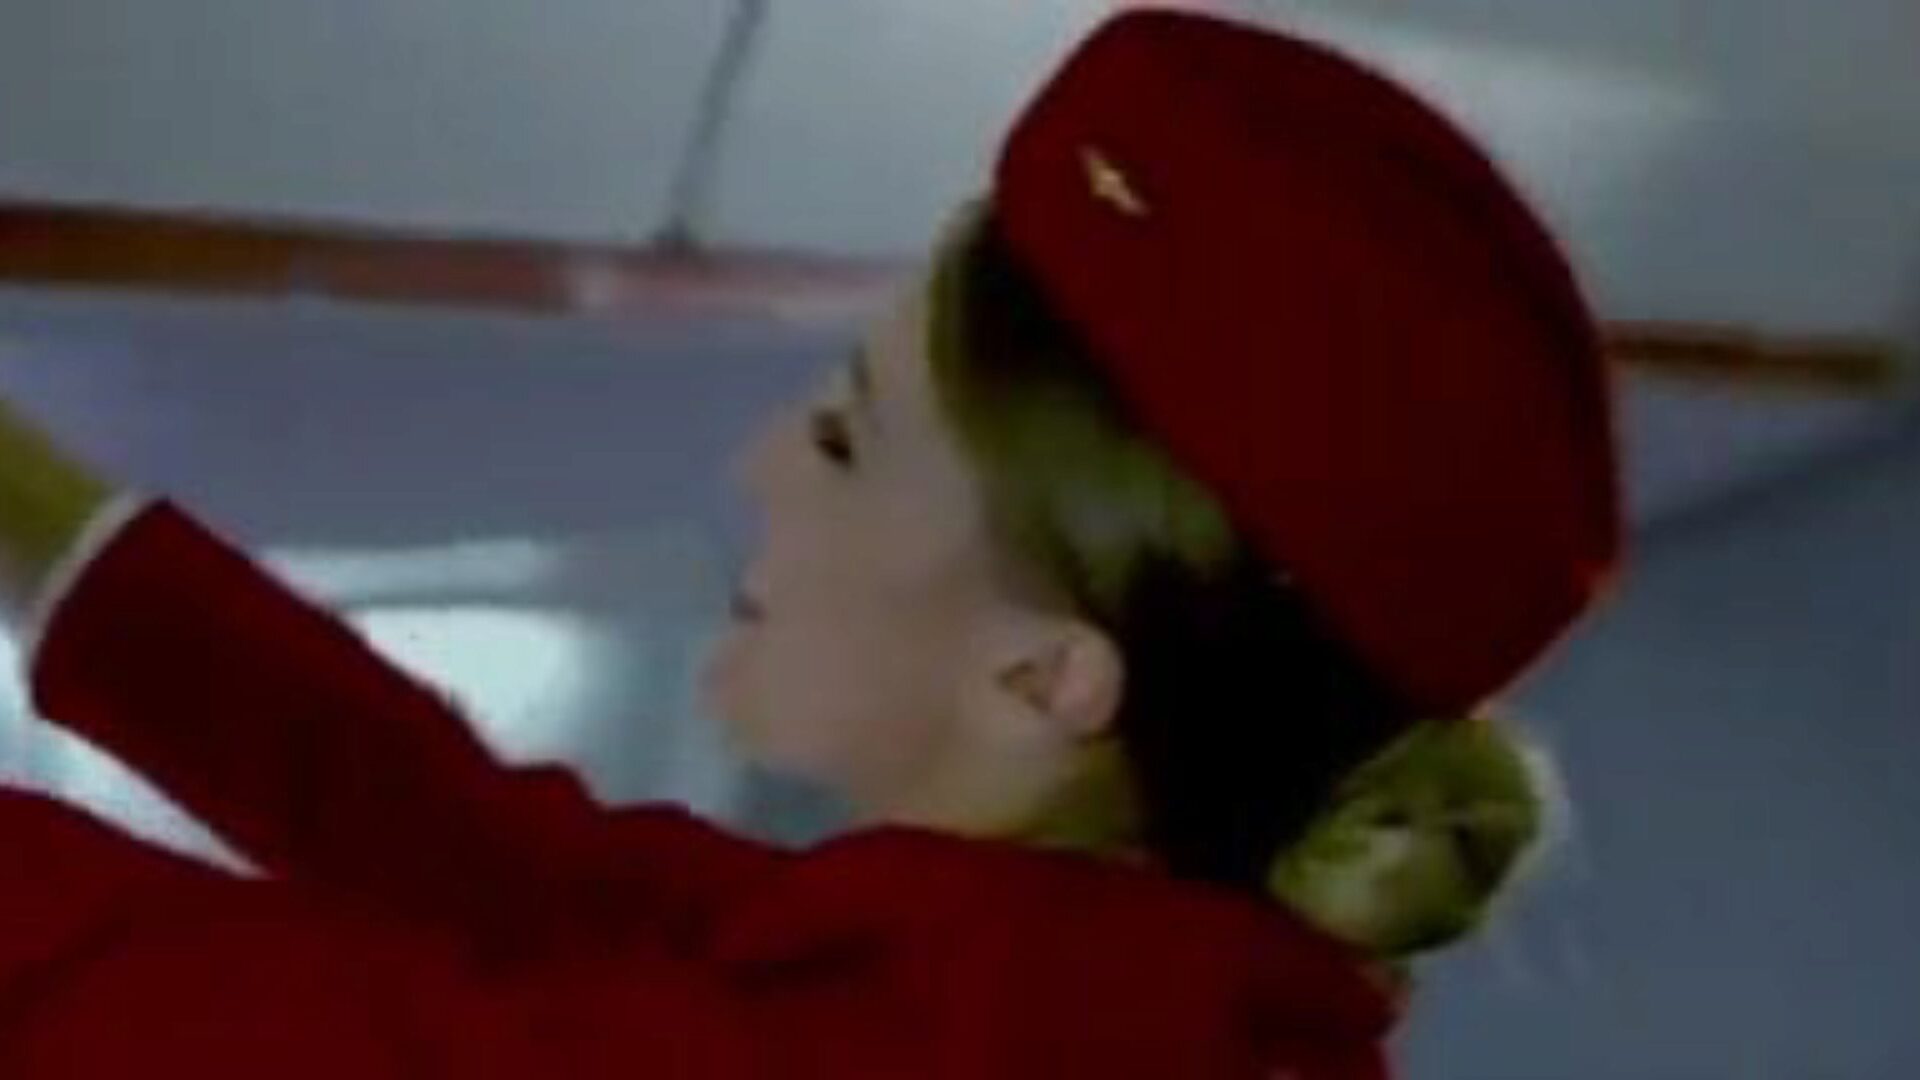 part2 sex stewardess stewardess nylon ... bekijk part2 sex stewardess stewardess nylon kousen clip op xhamster - het ultieme archief van gratis xnx mobiele & twitter sex porno tube clips